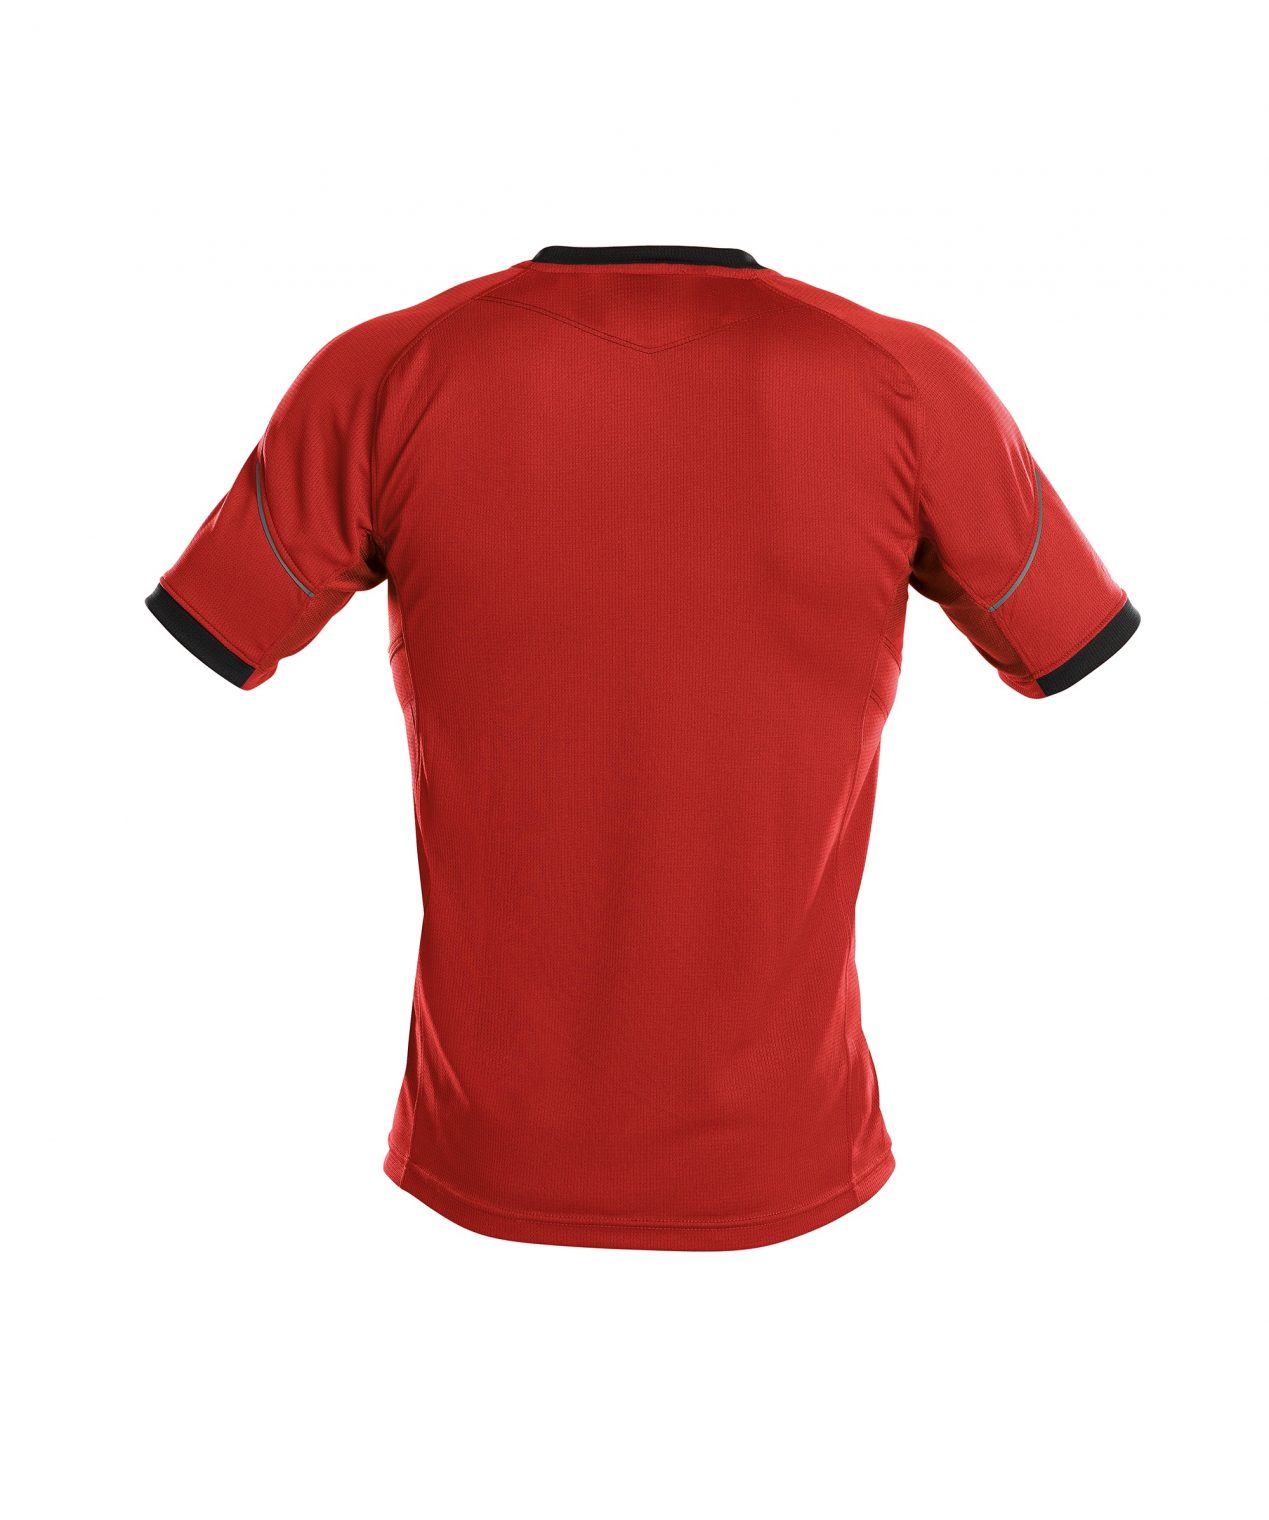 nexus t shirt red black back